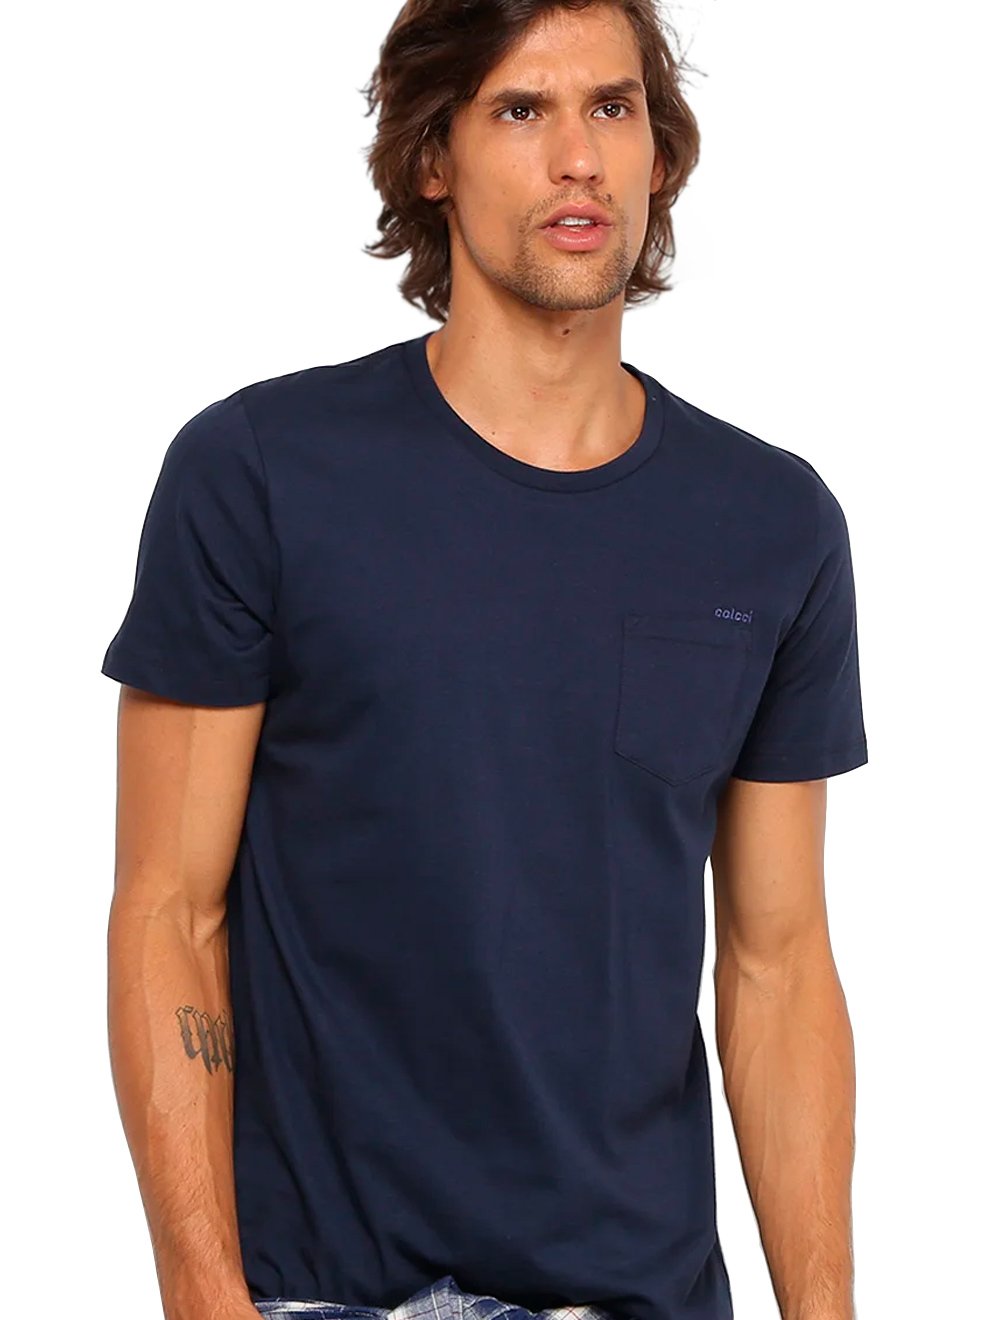 Camiseta Colcci Masculina Pocket Authentic Trademark Azul Marinho